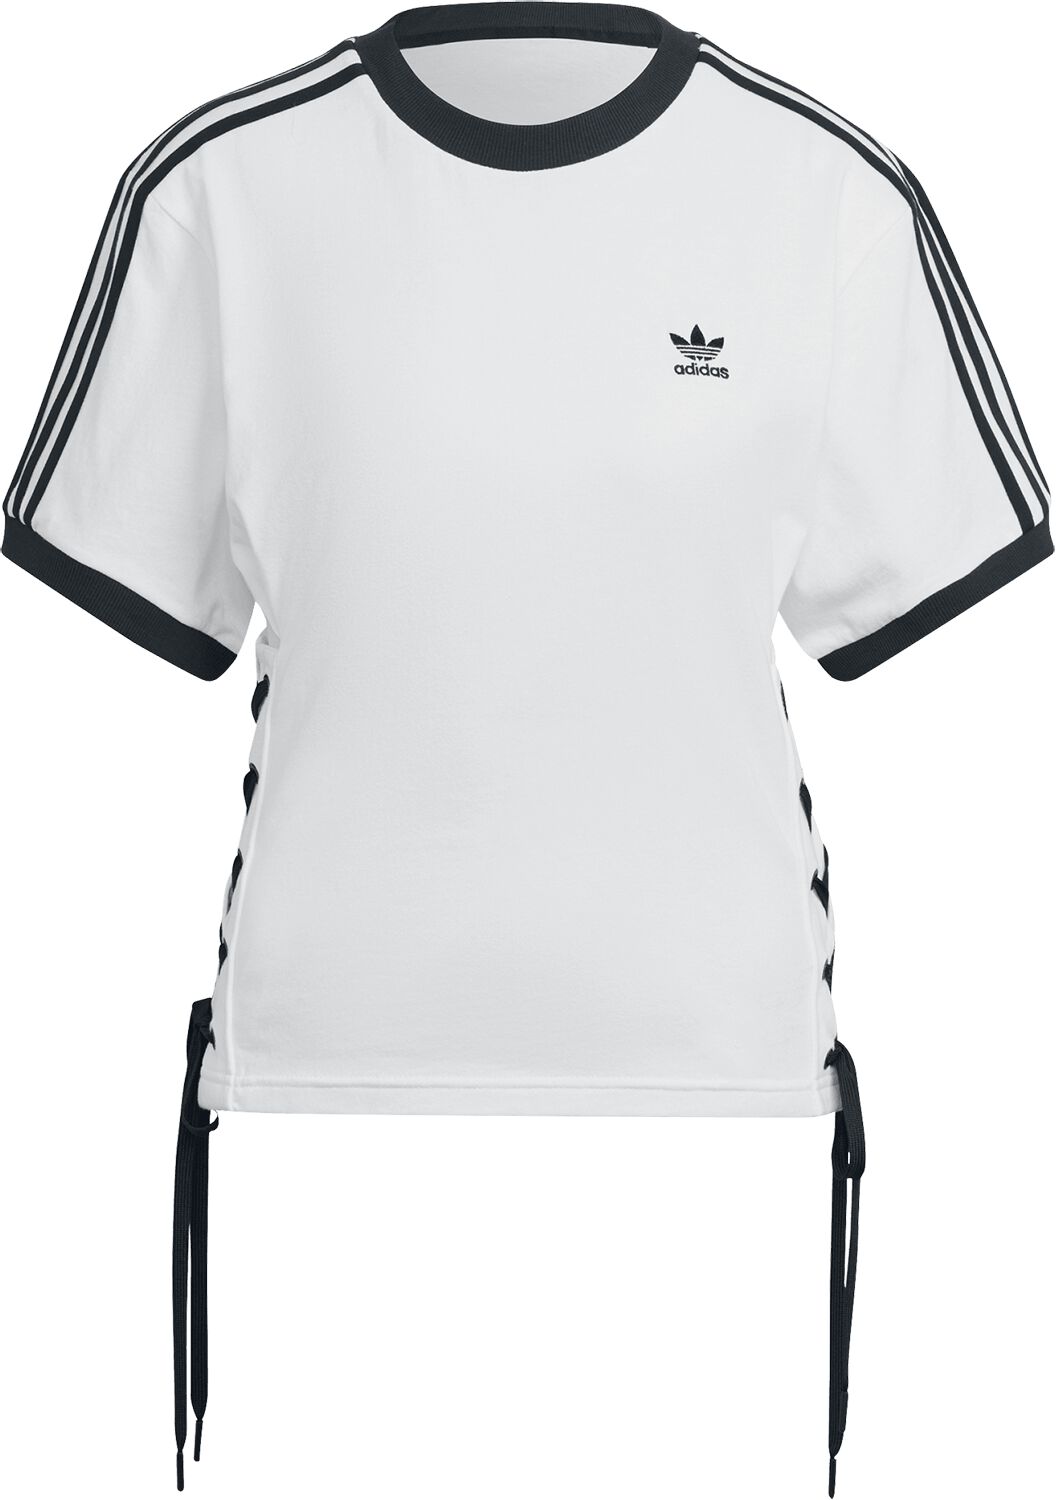 Adidas Laced Tee T-Shirt white